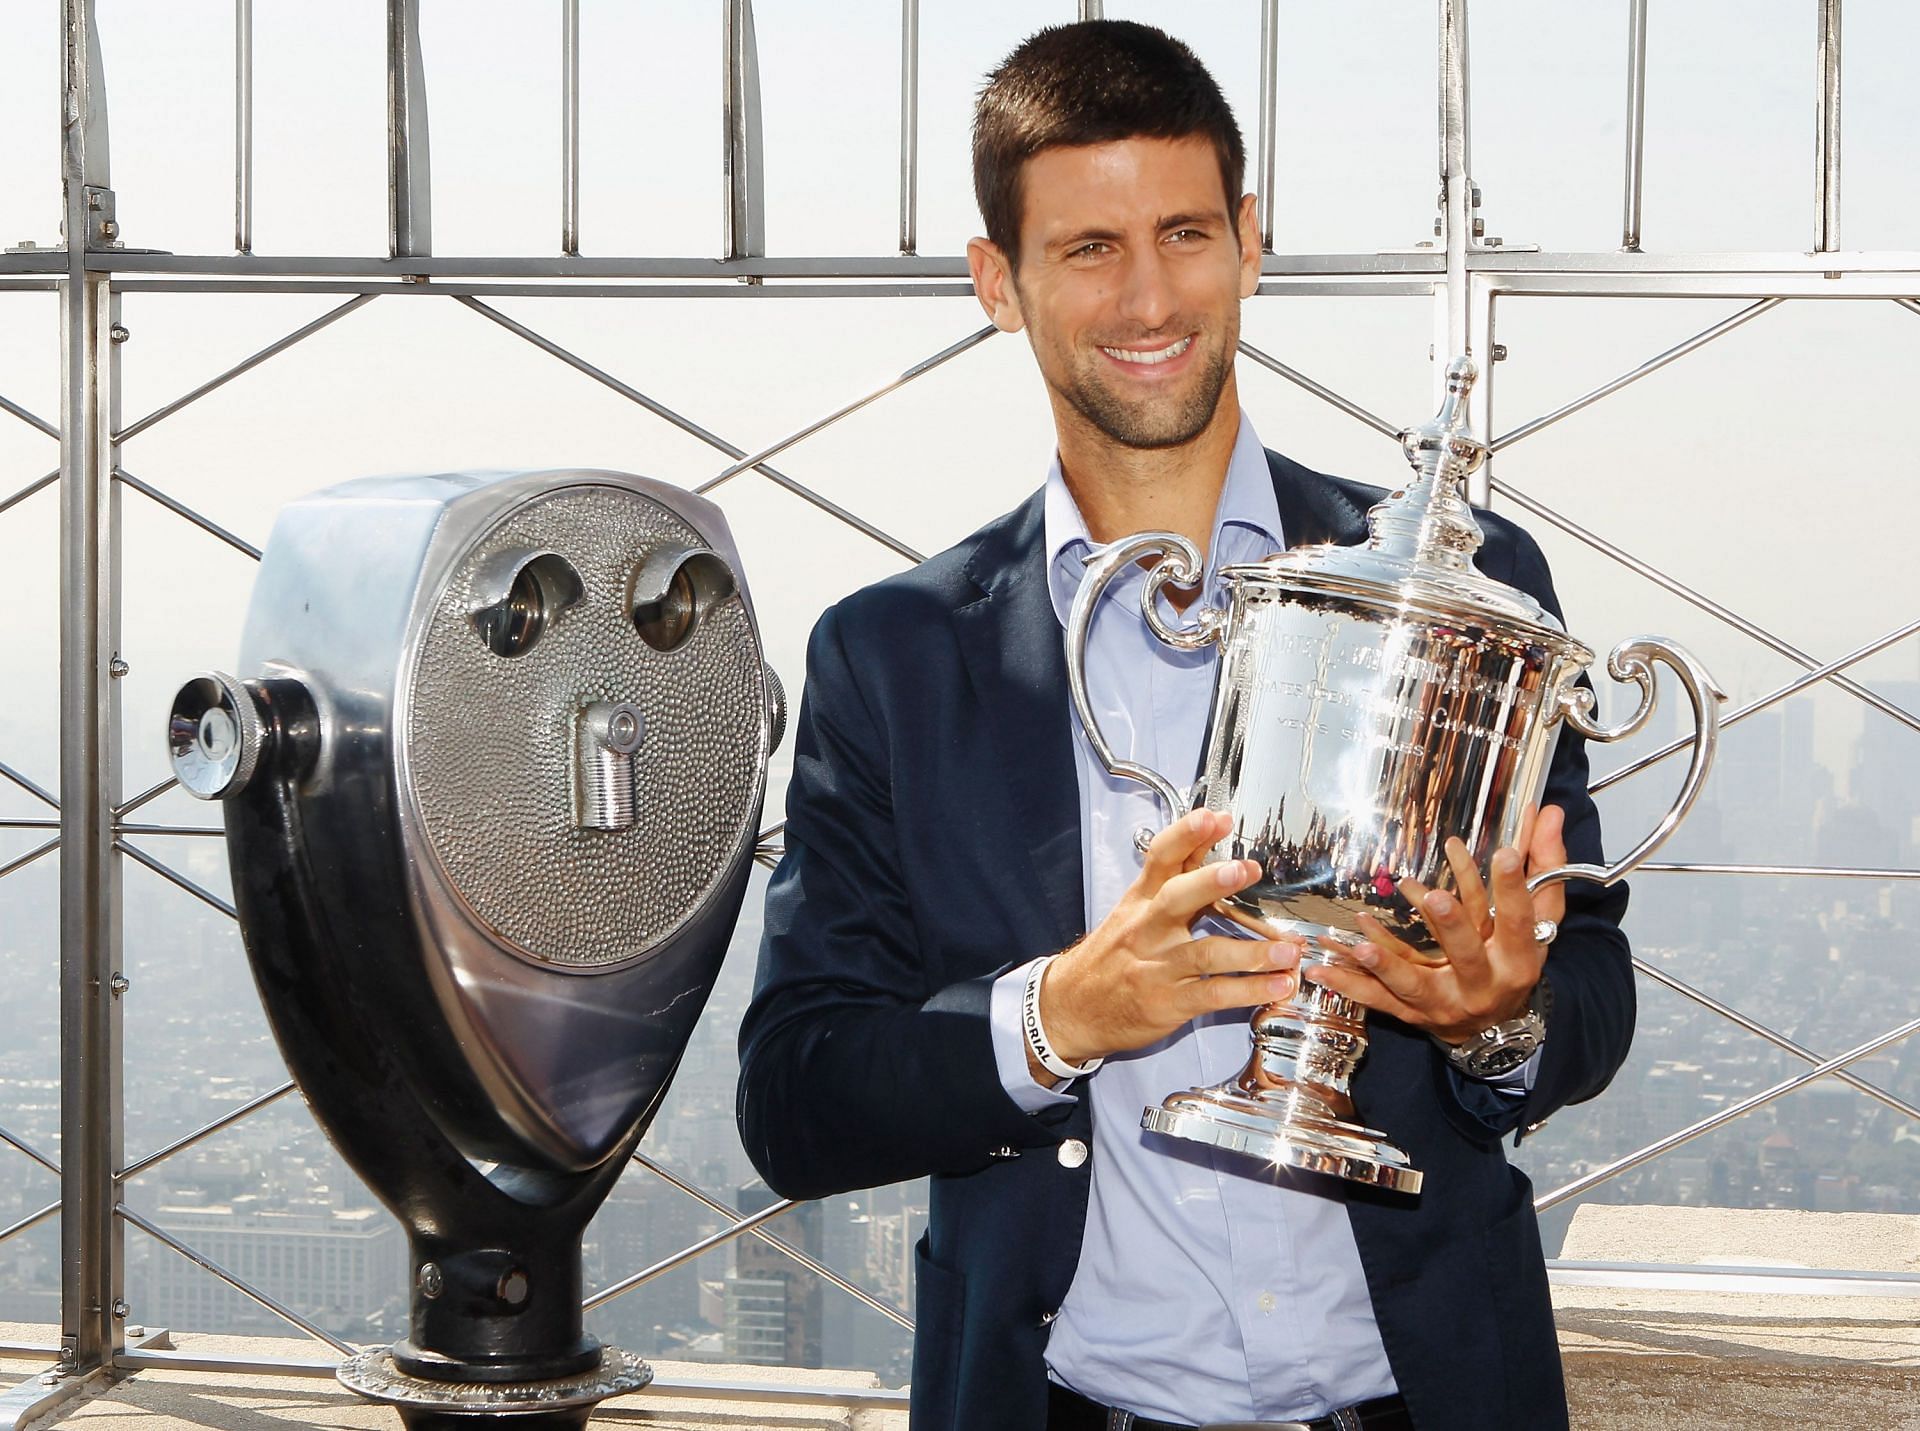 US Open 2011 Champion Novak Djokovic